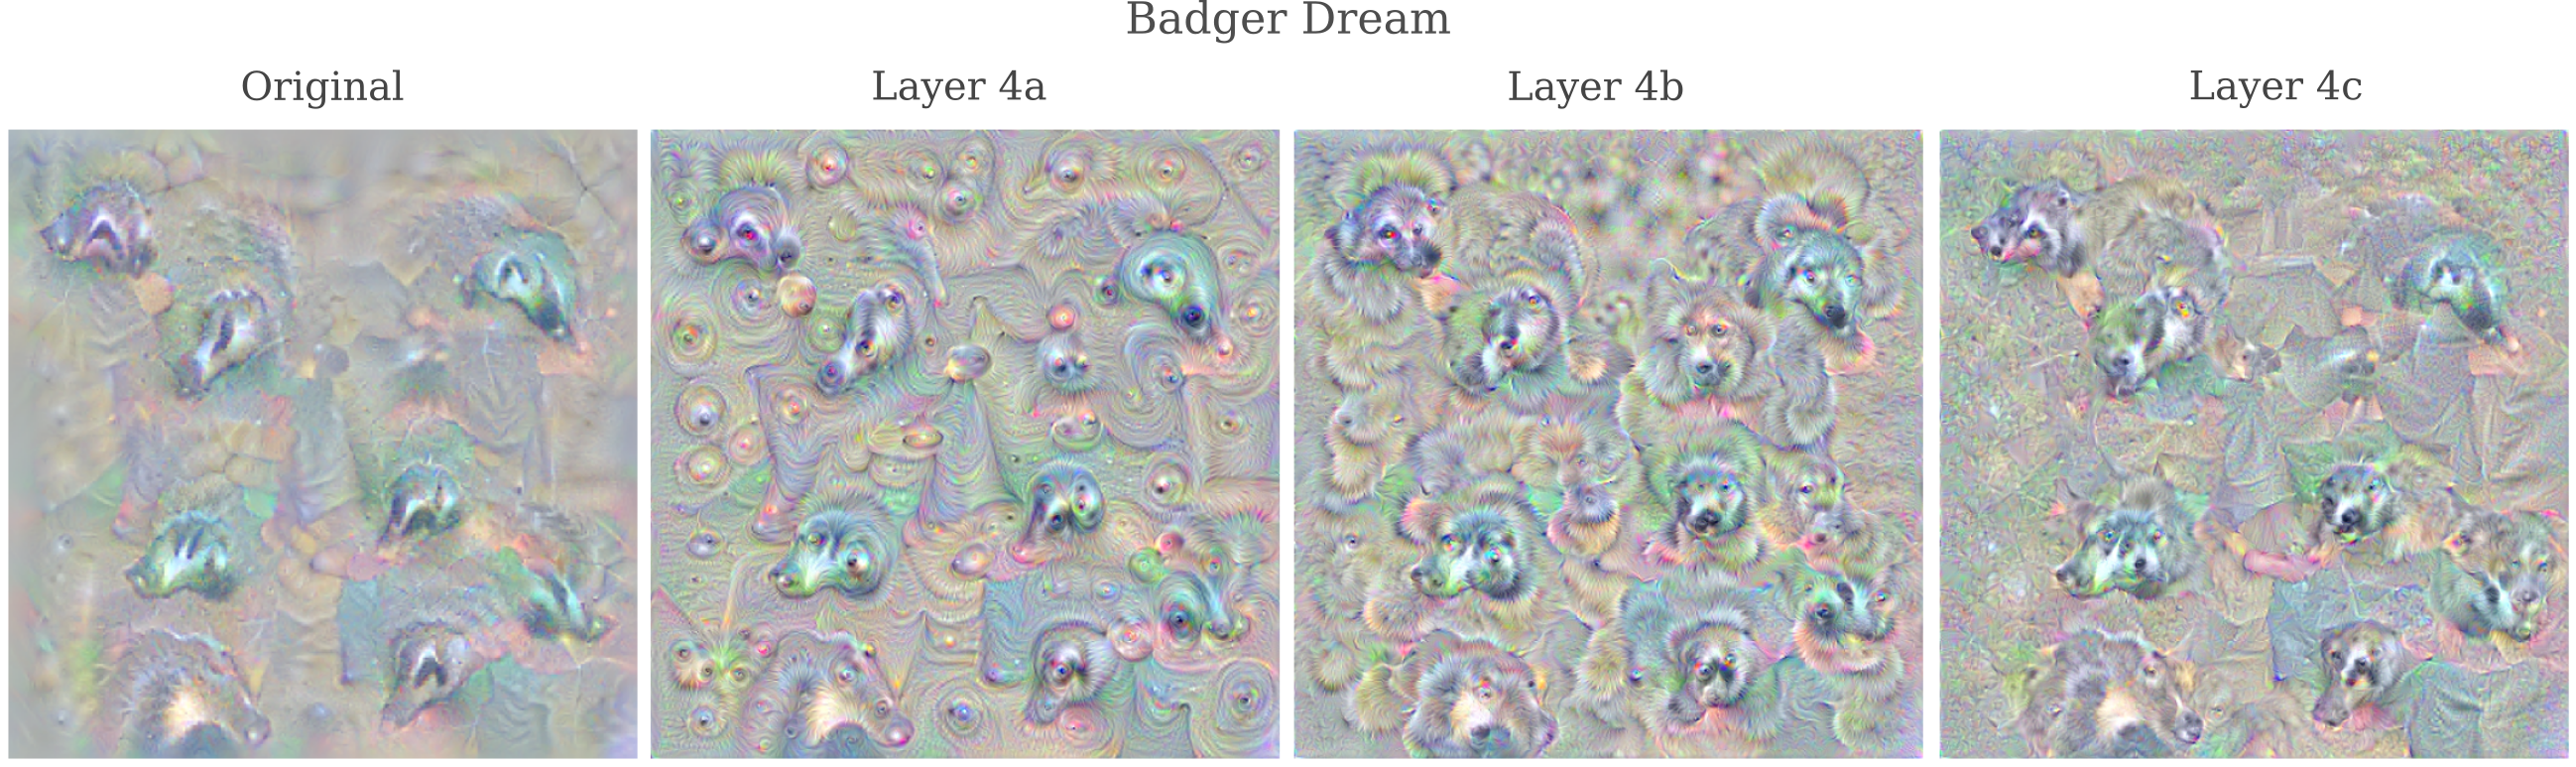 deep dream badger